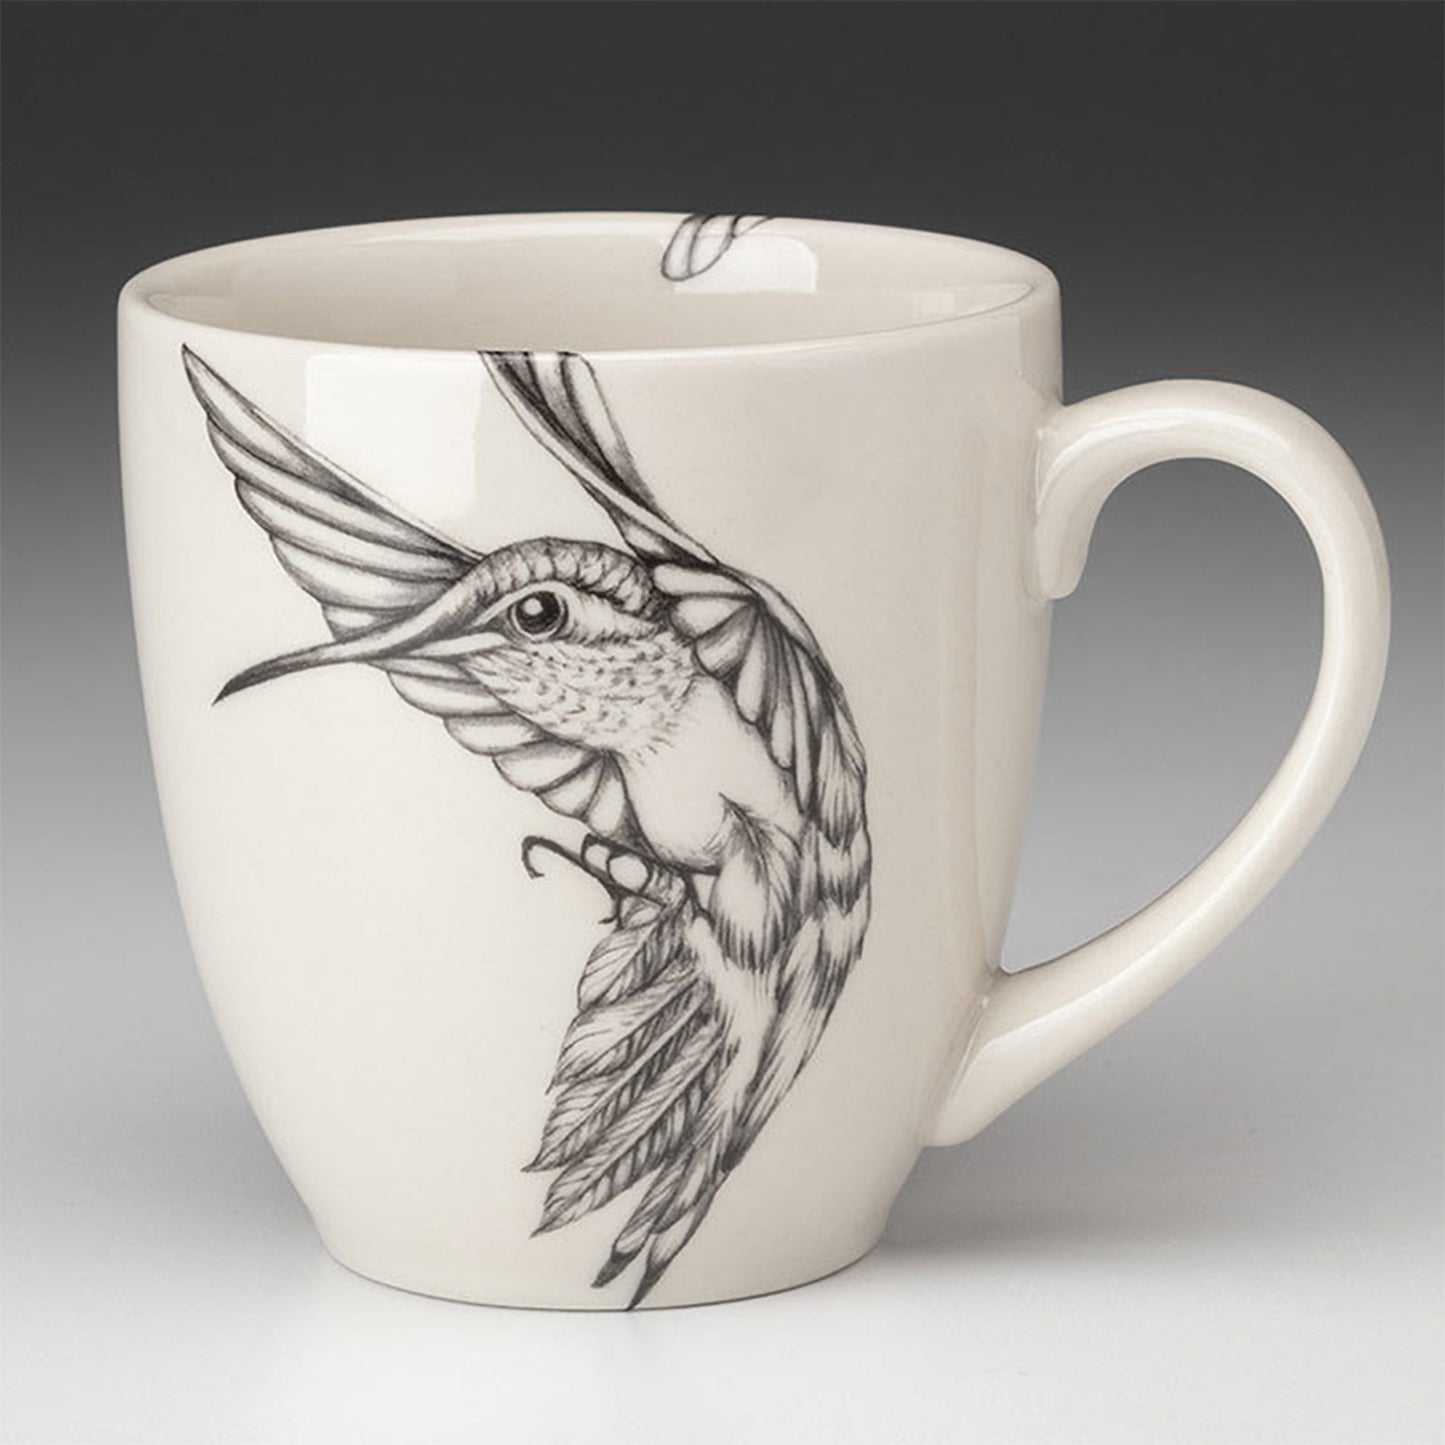 Laura Zindel Mug - More designs available